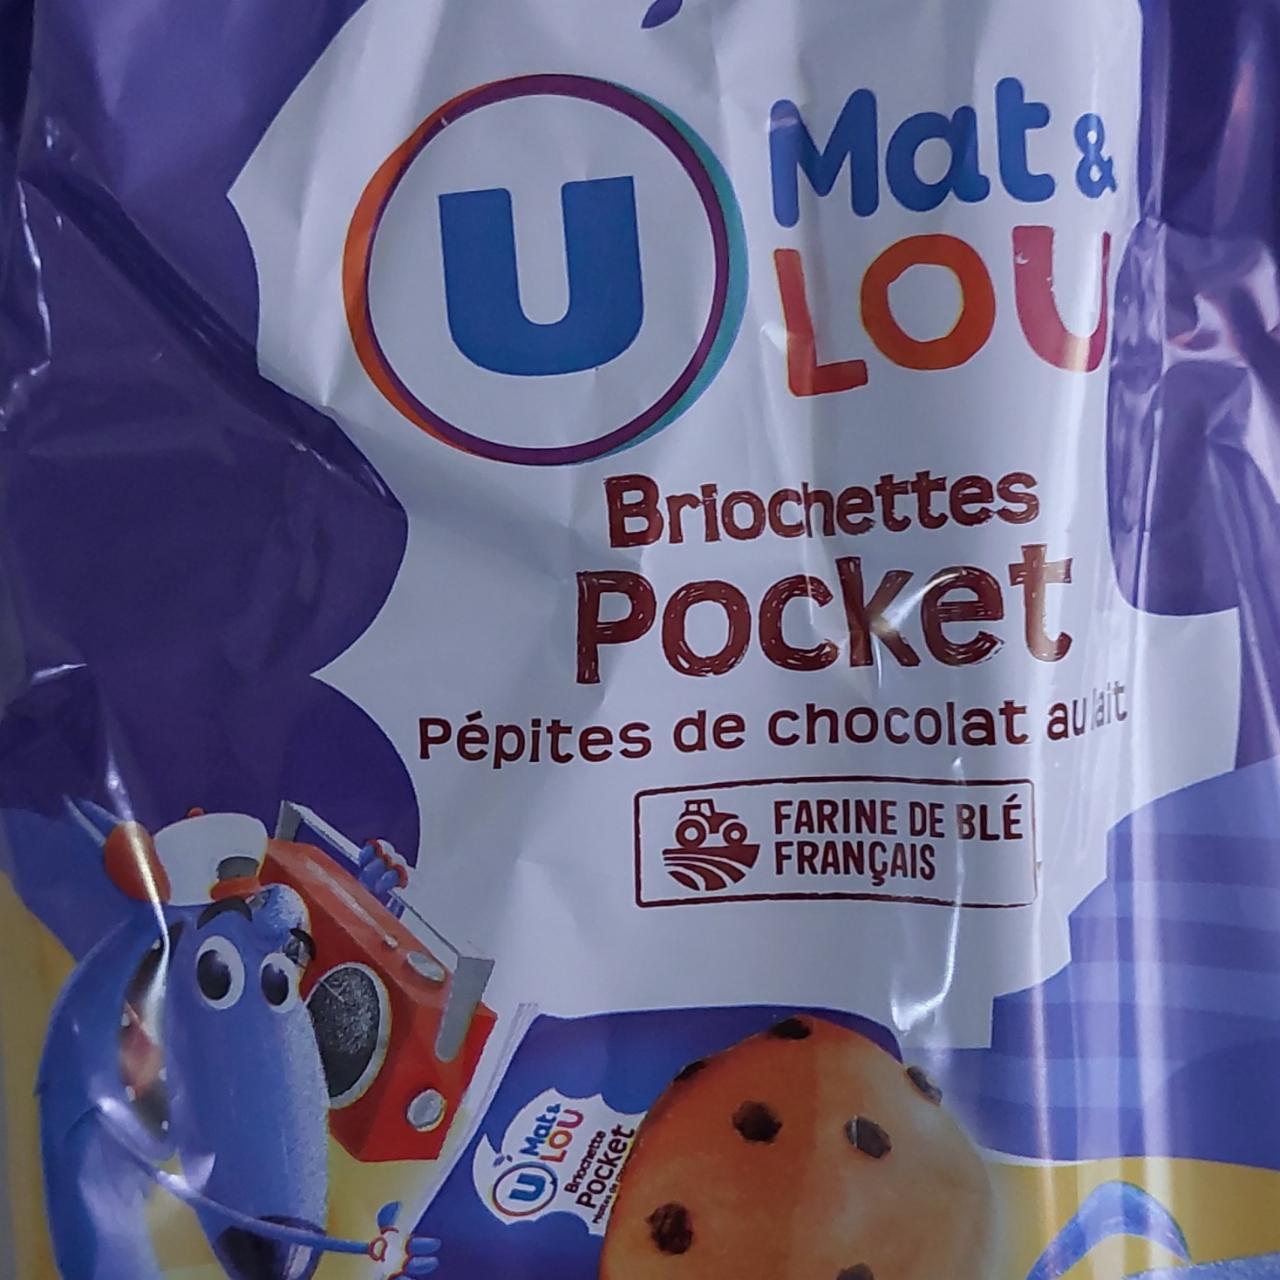 Fotografie - Briochettes Pocket Mat & Lou